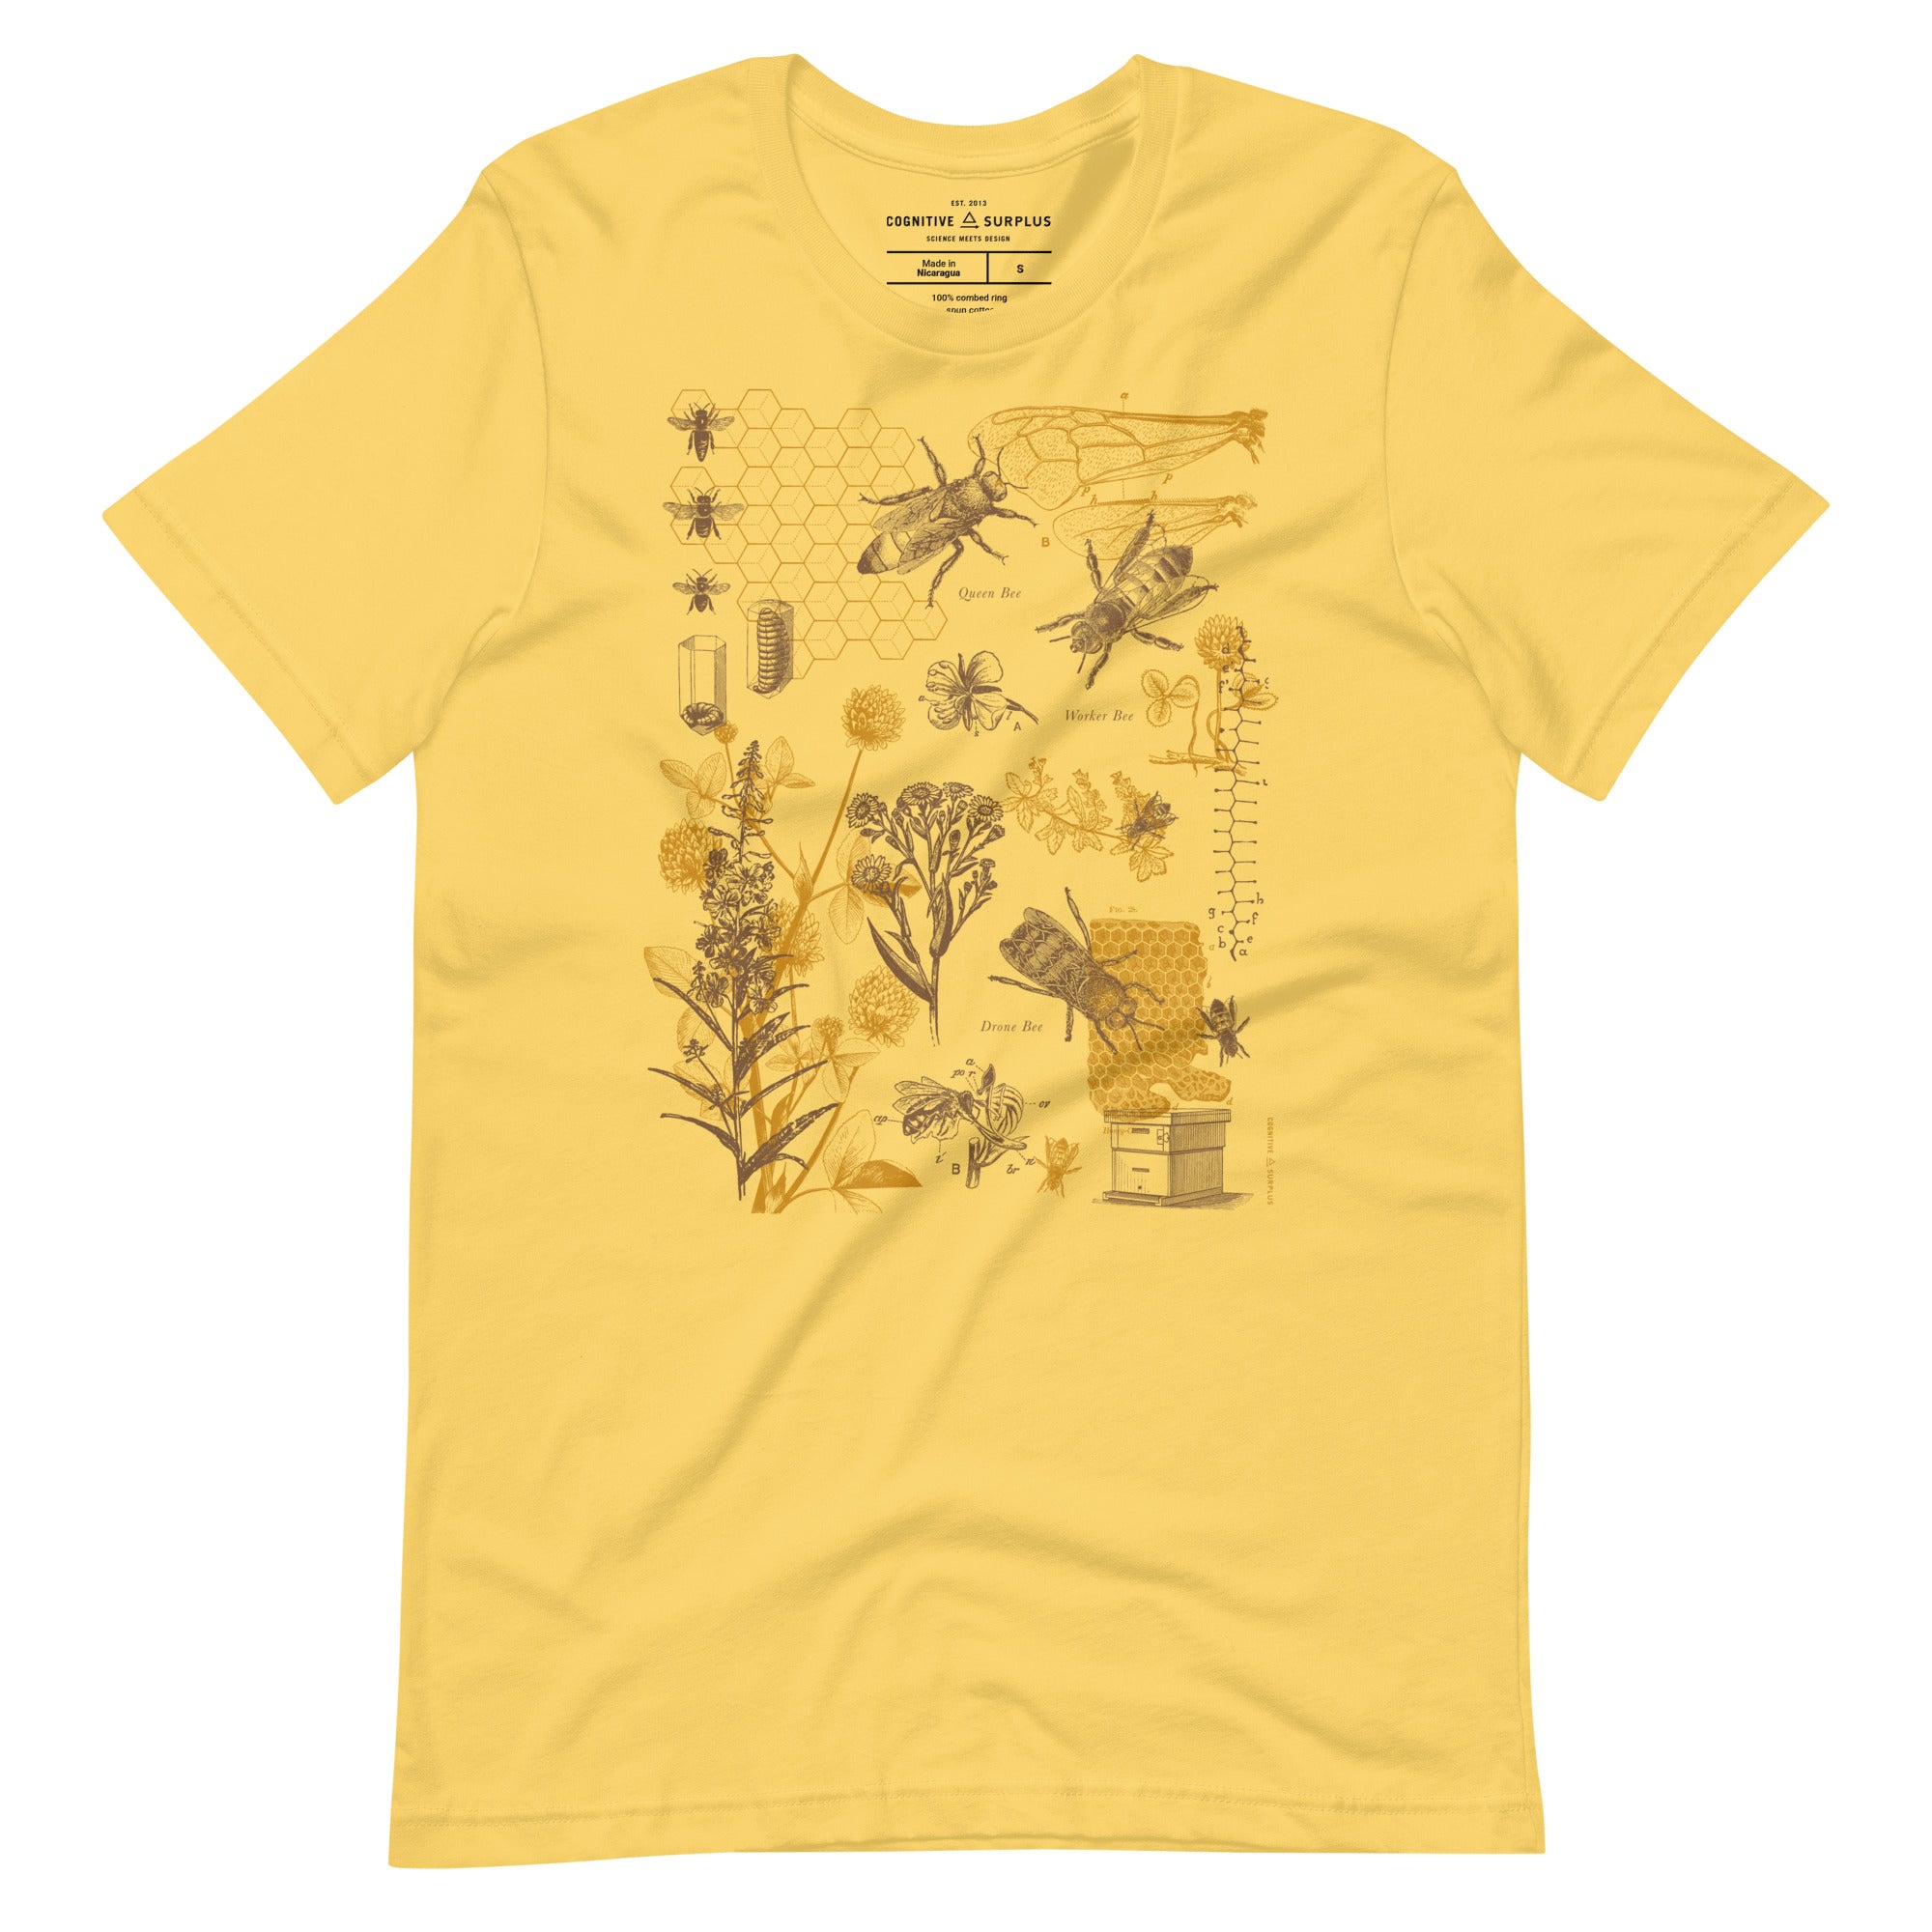 unisex-staple-t-shirt-yellow-front-6547ba24746c6.jpg